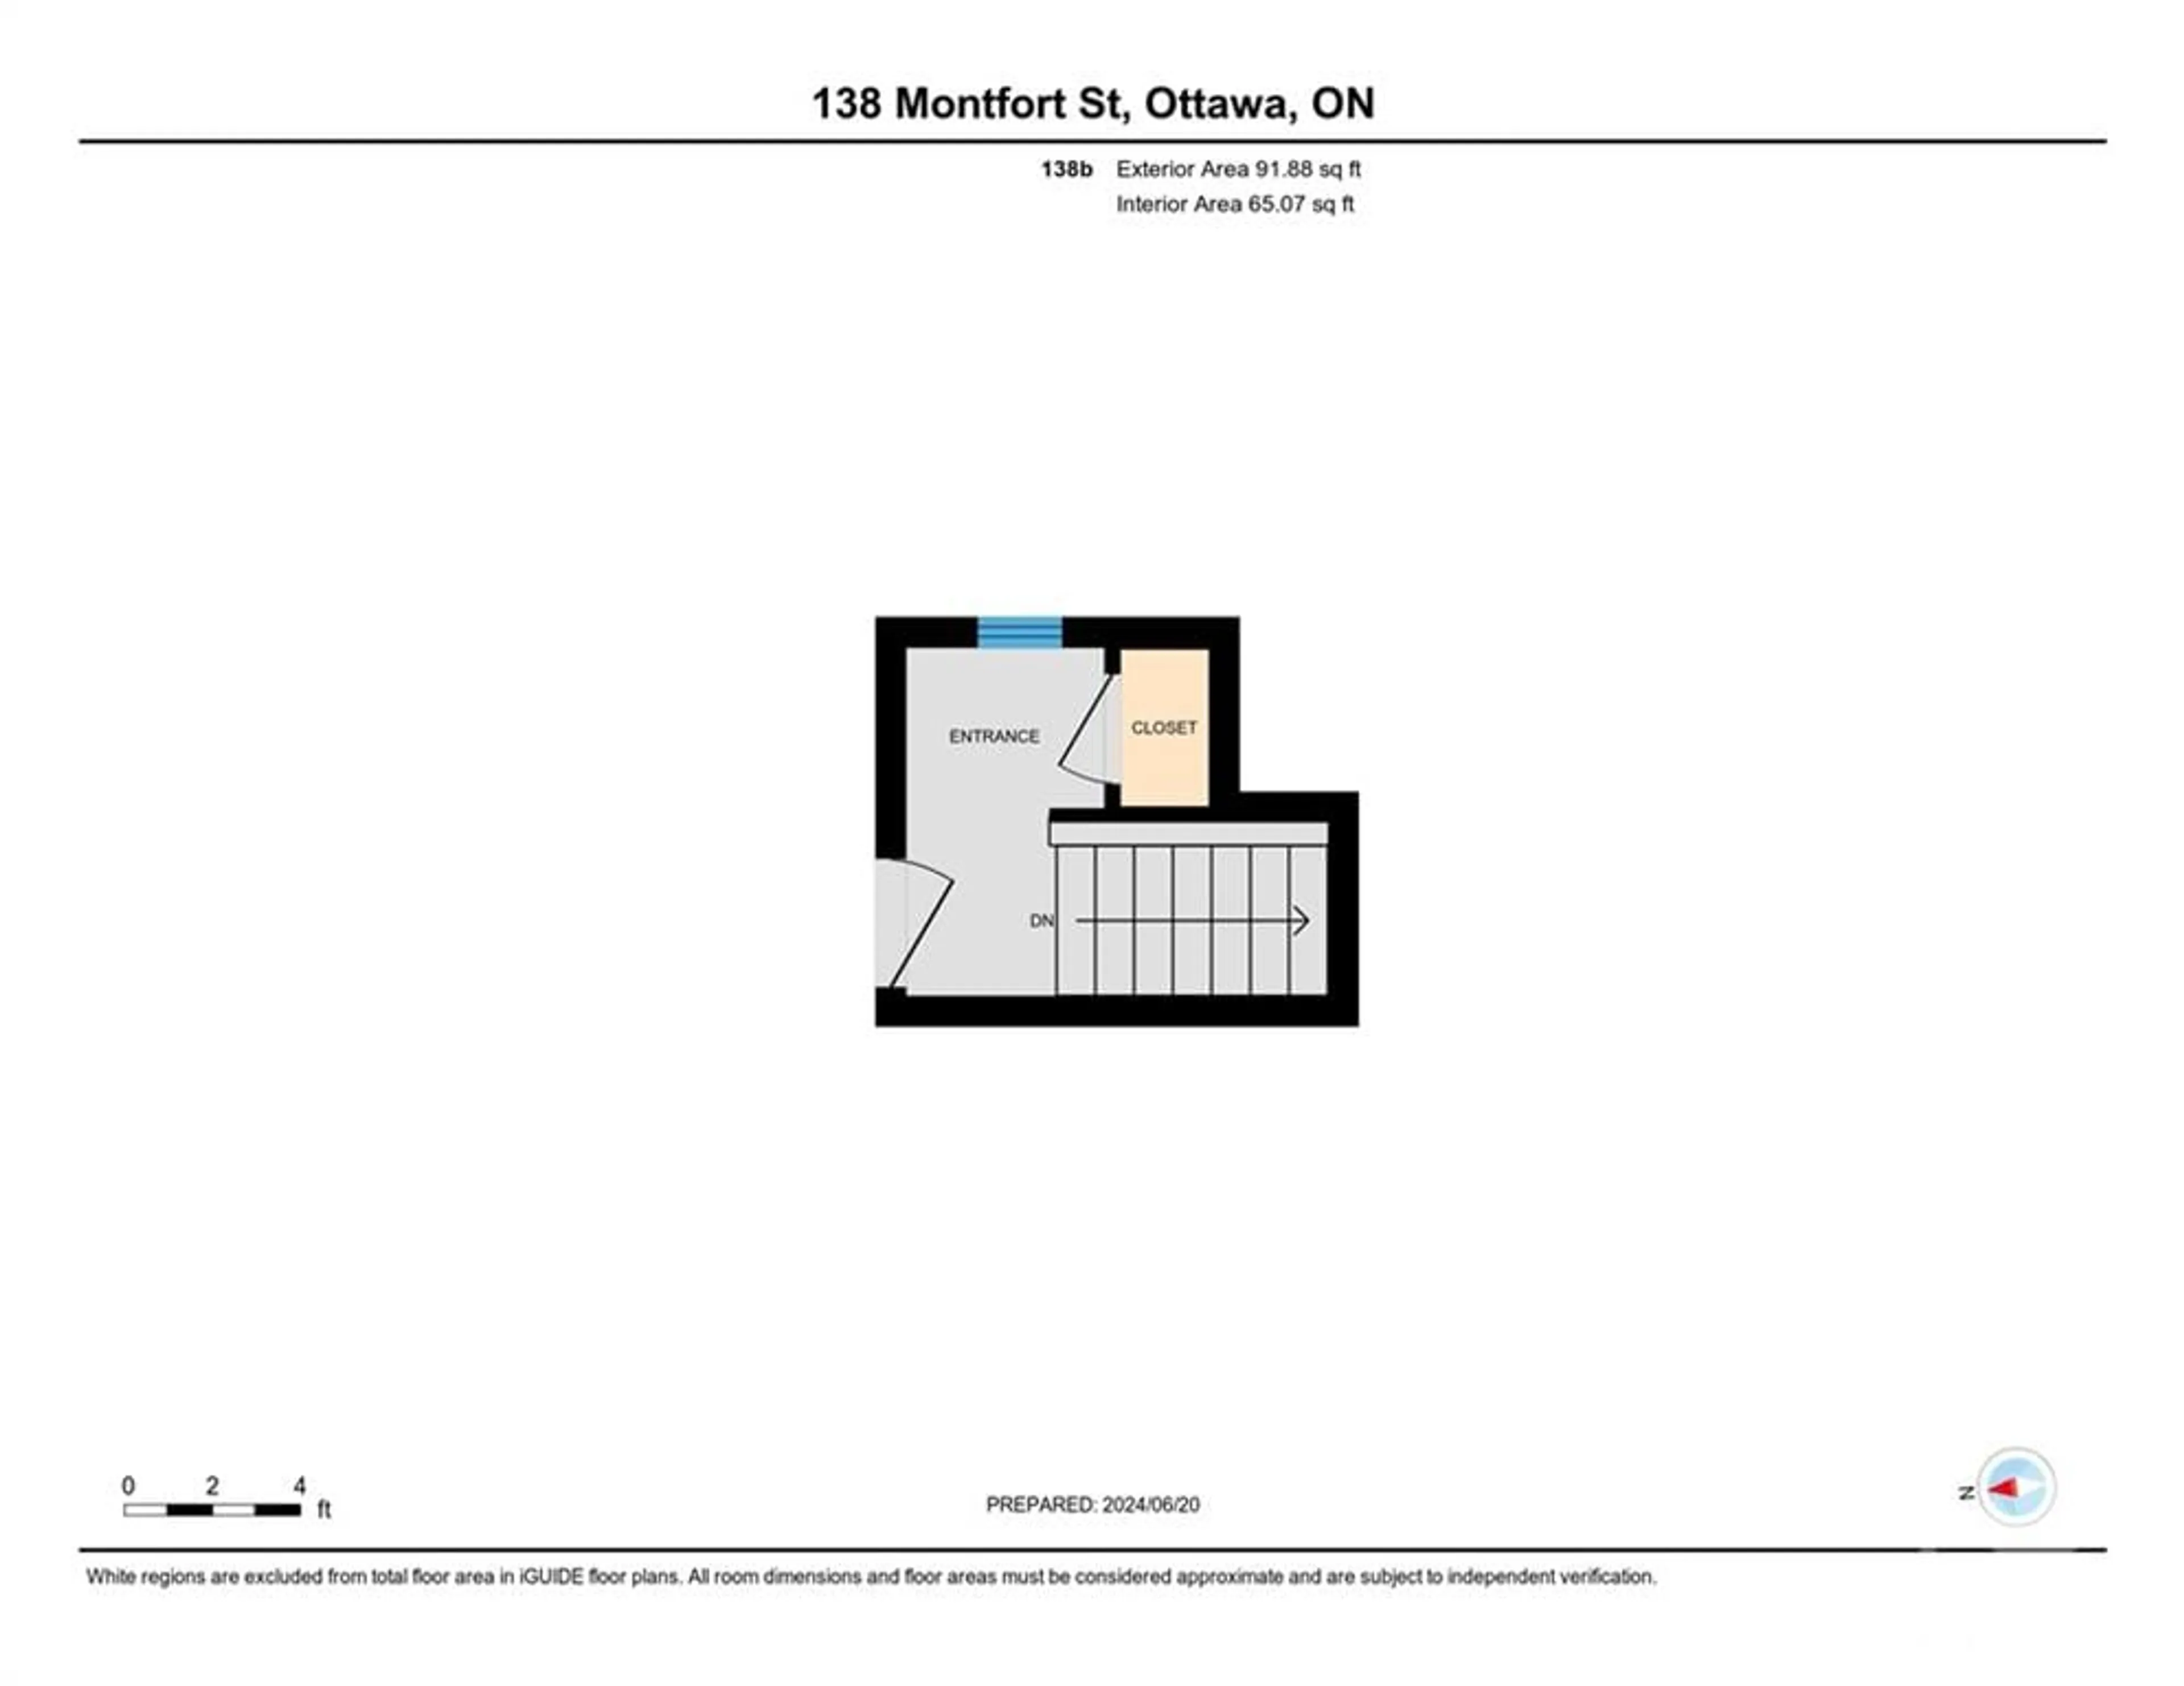 Floor plan for 142/144 MONTFORT St, Ottawa Ontario K1L 5P6